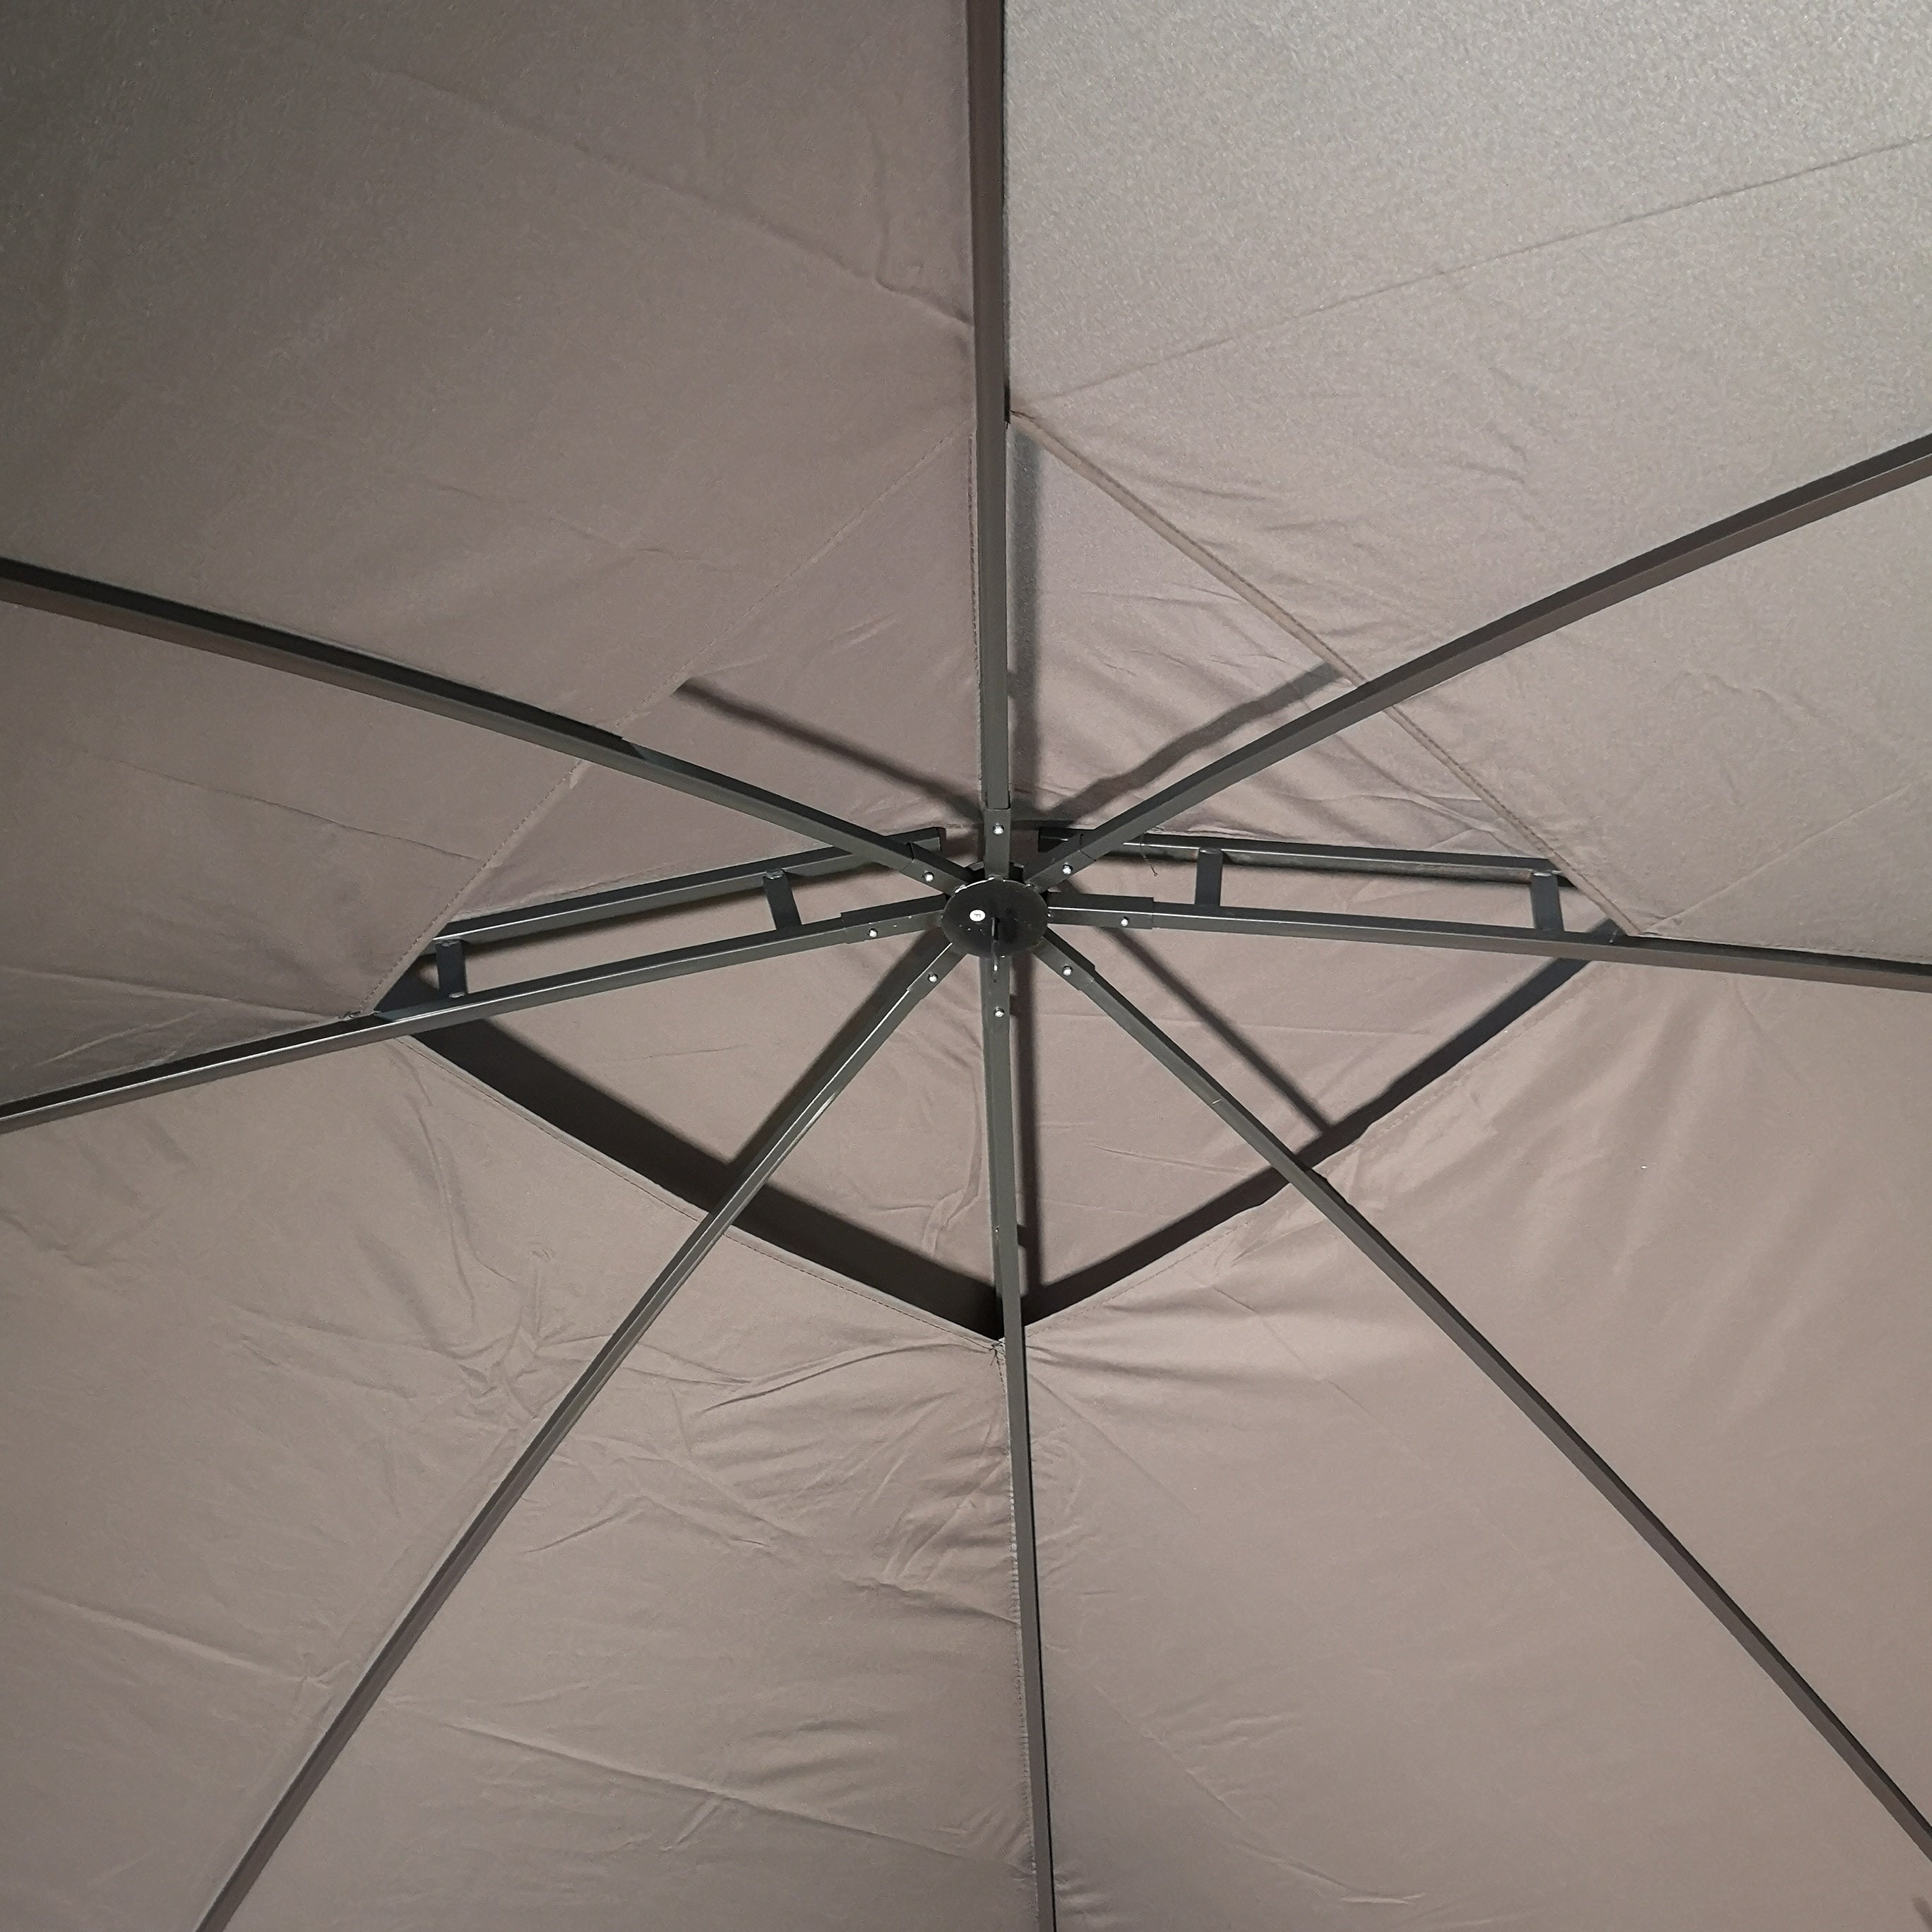 3m x 3m Large Stylish Grey Gazebo Party Tent with Side Walls